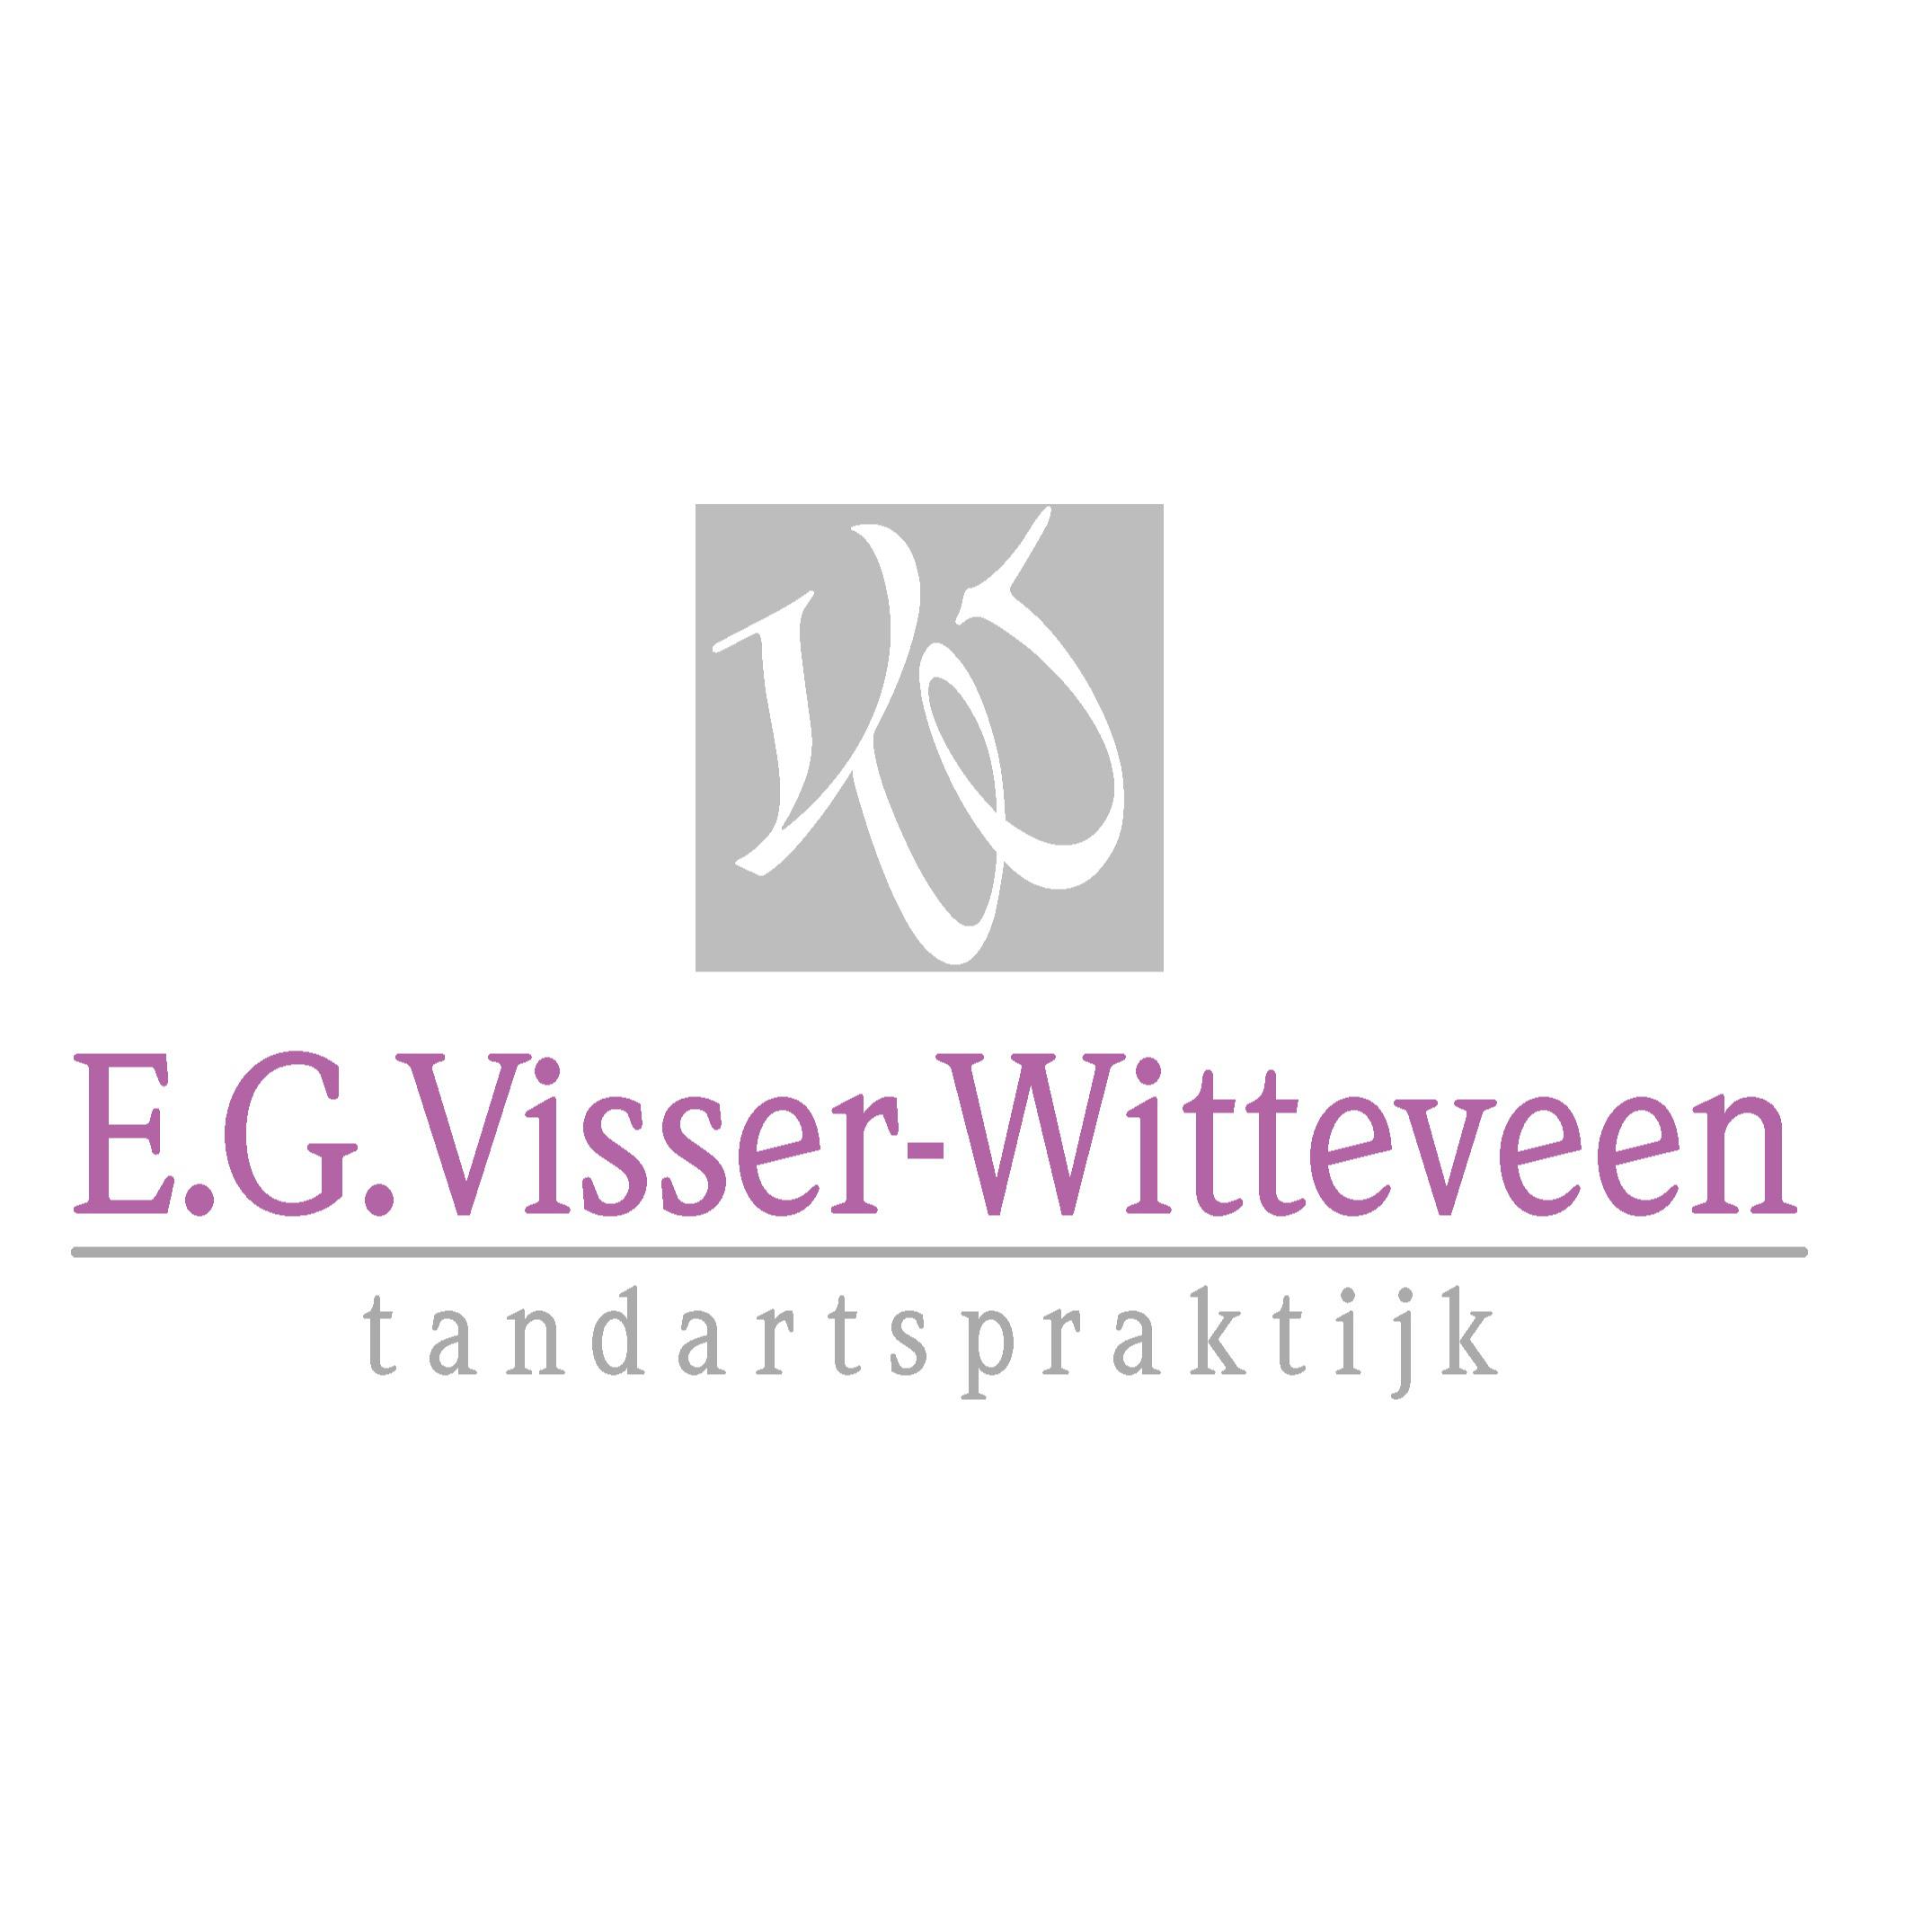 Tandartspraktijk Visser-Witteveen Logo